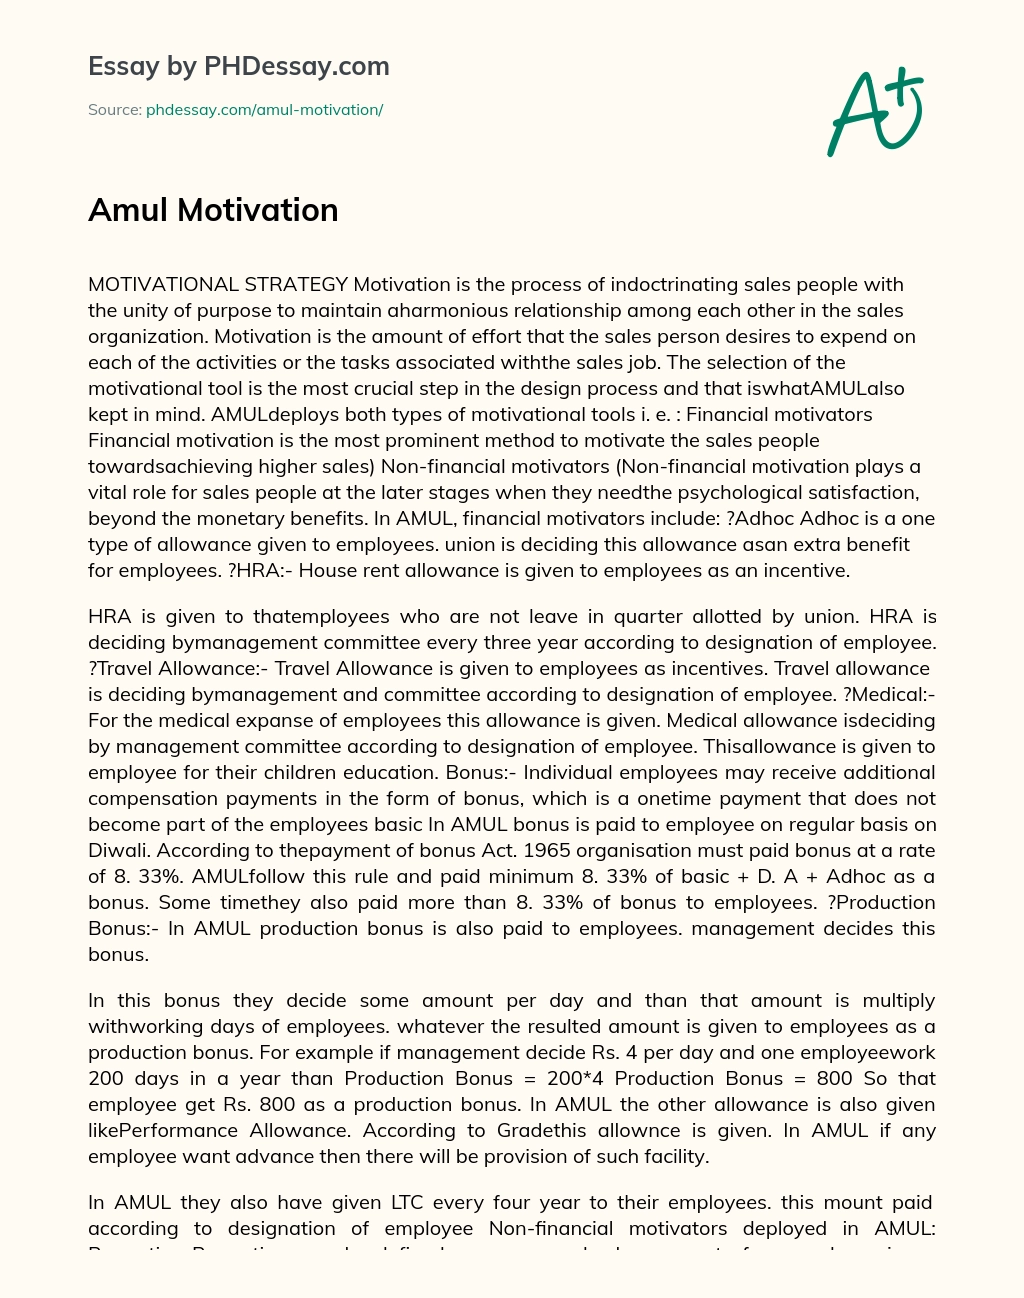 Amul Motivation essay